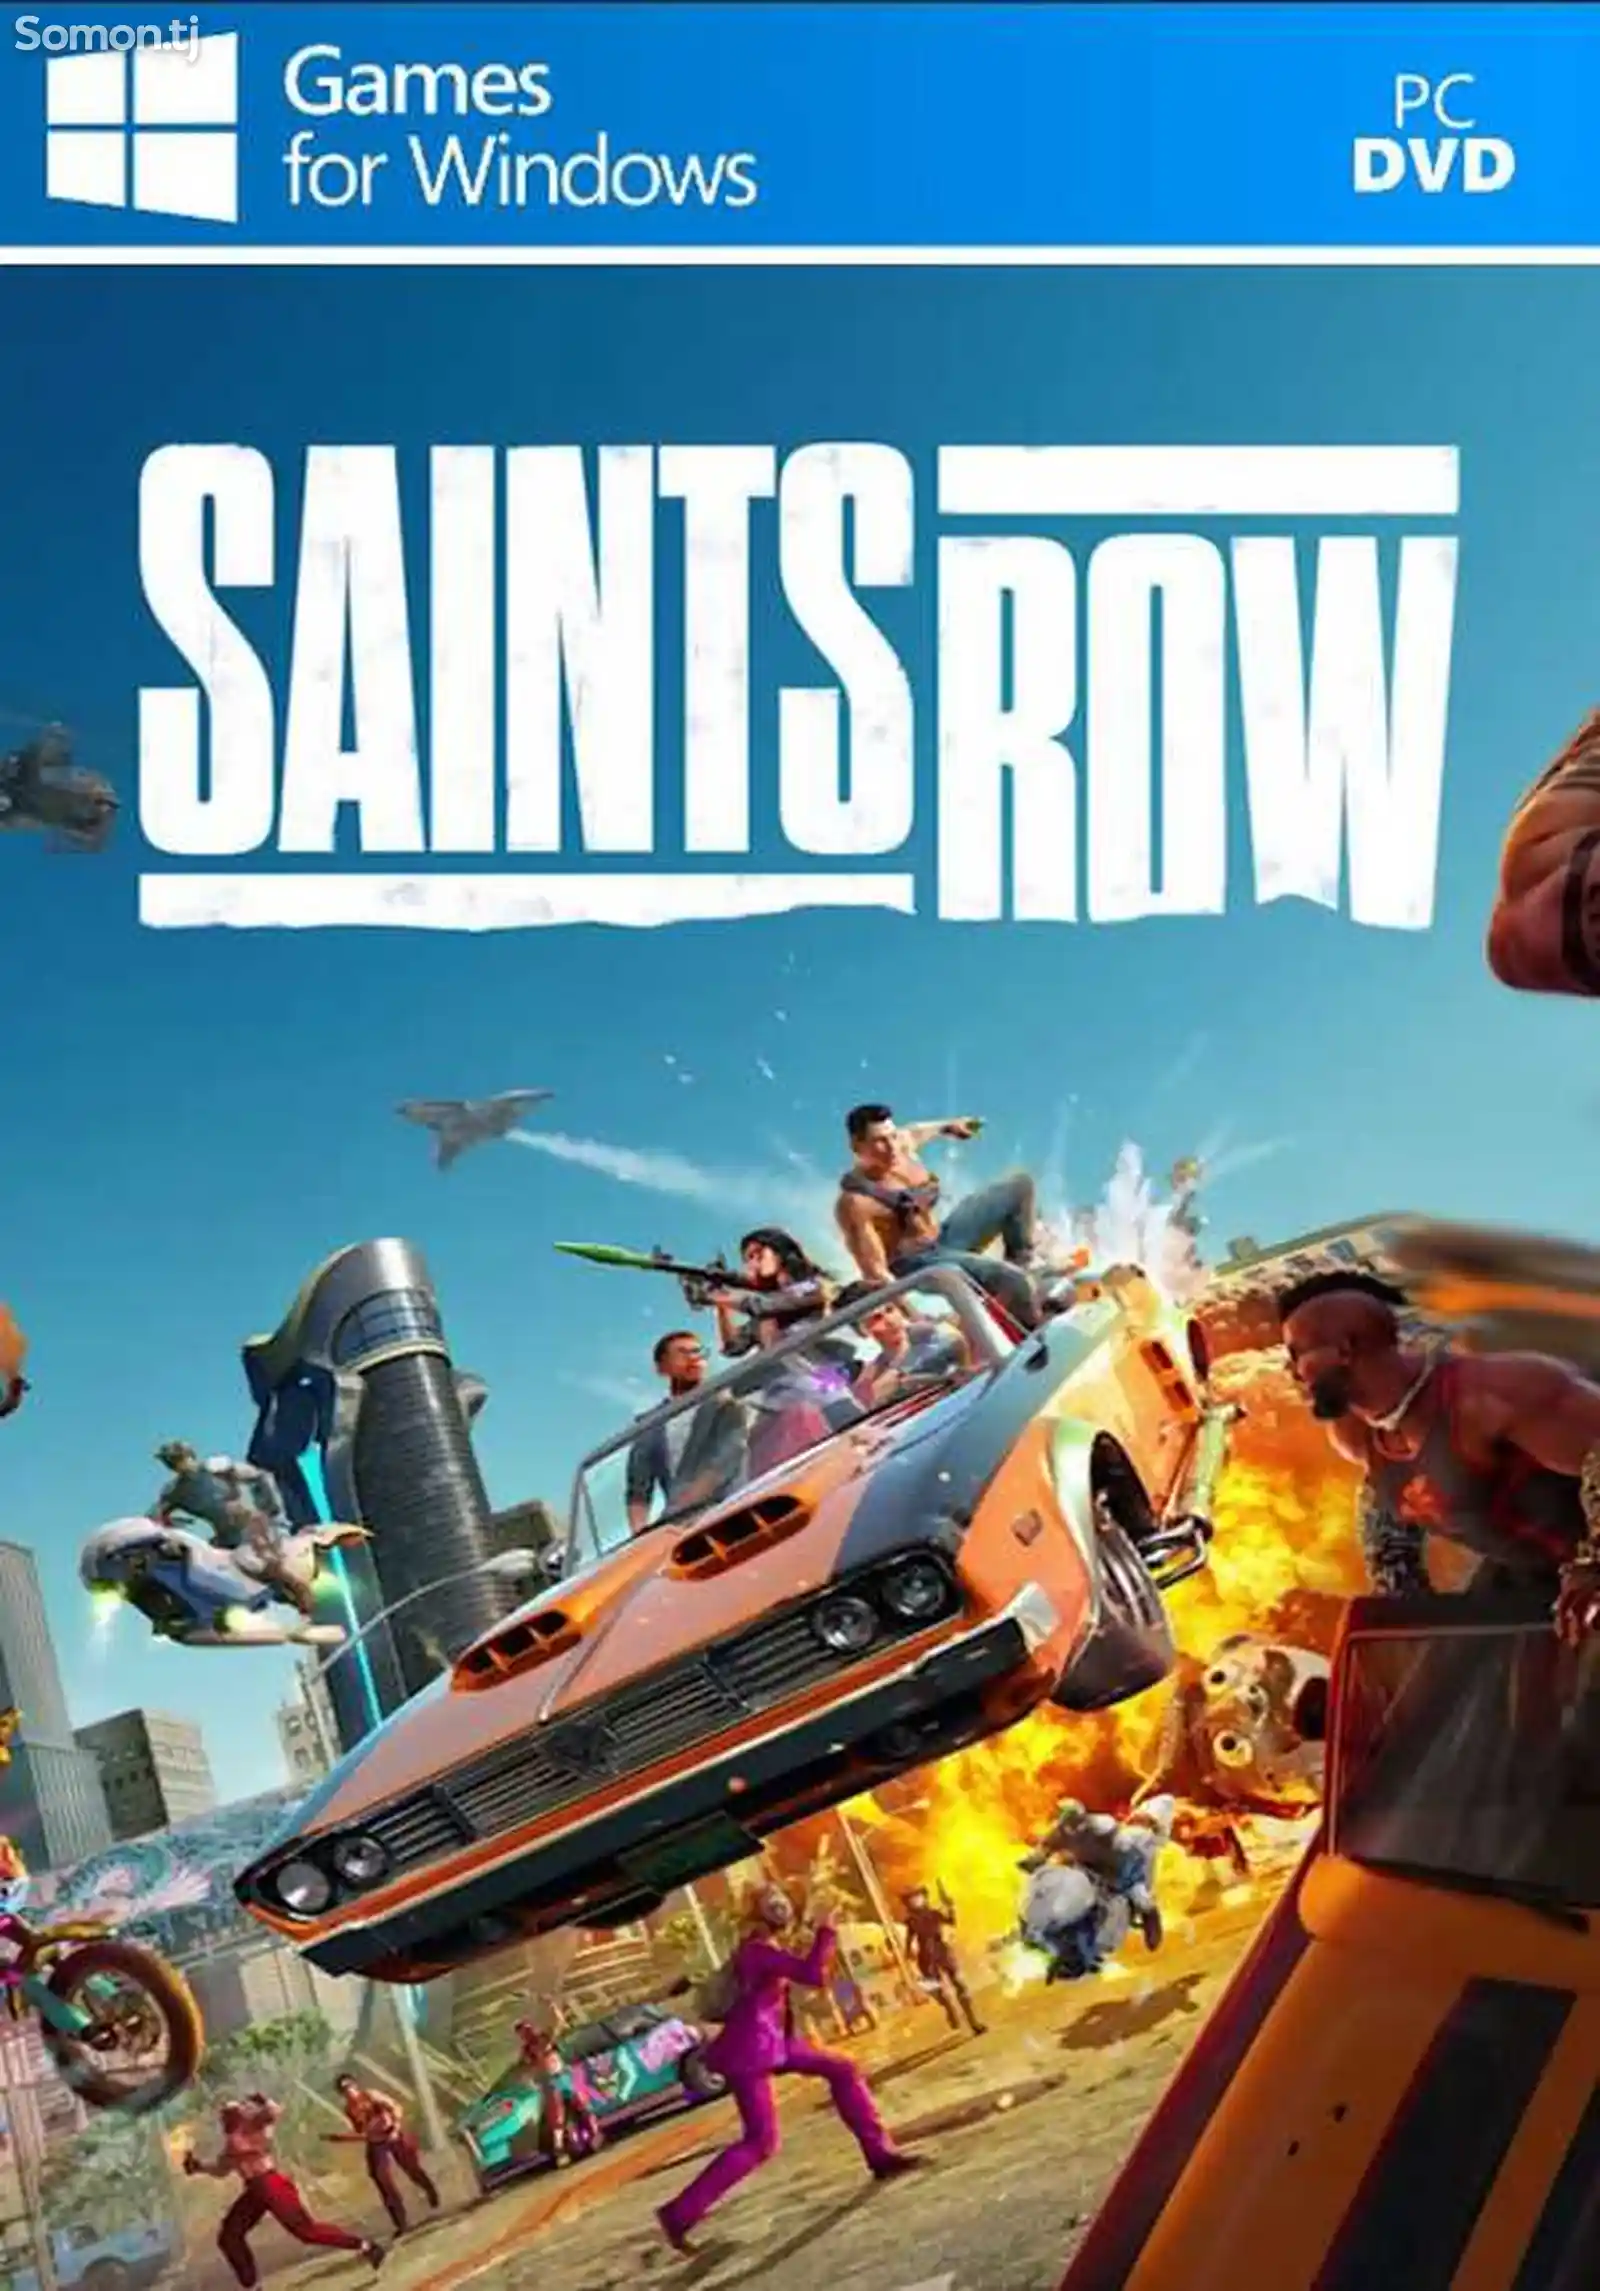 Игра Saints row 2022 для компьютера-пк-pc-1